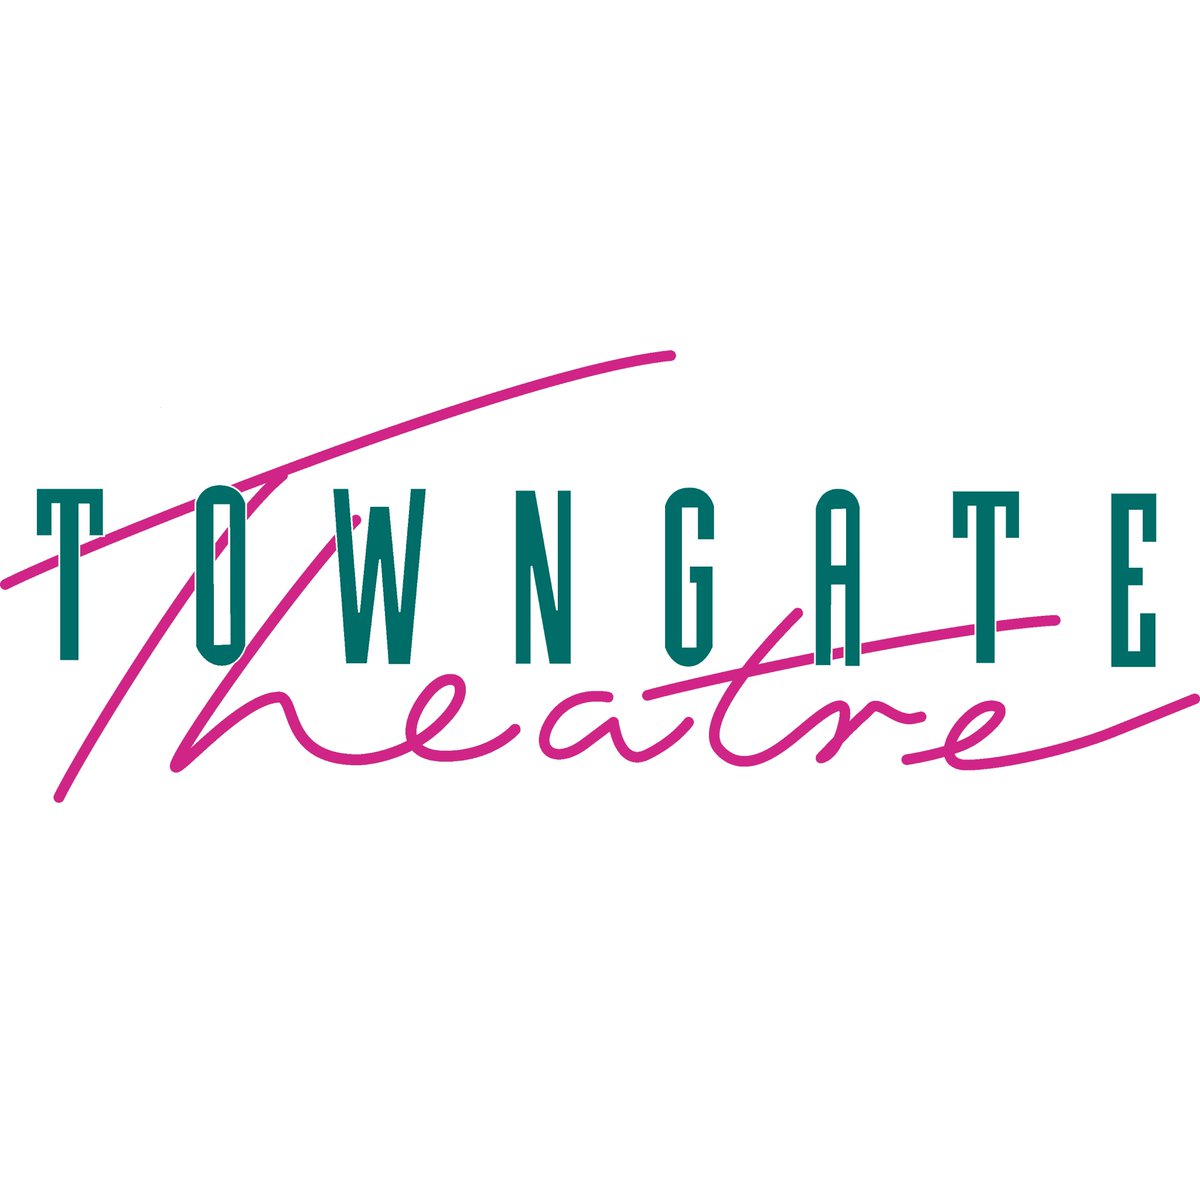 towngate theatre